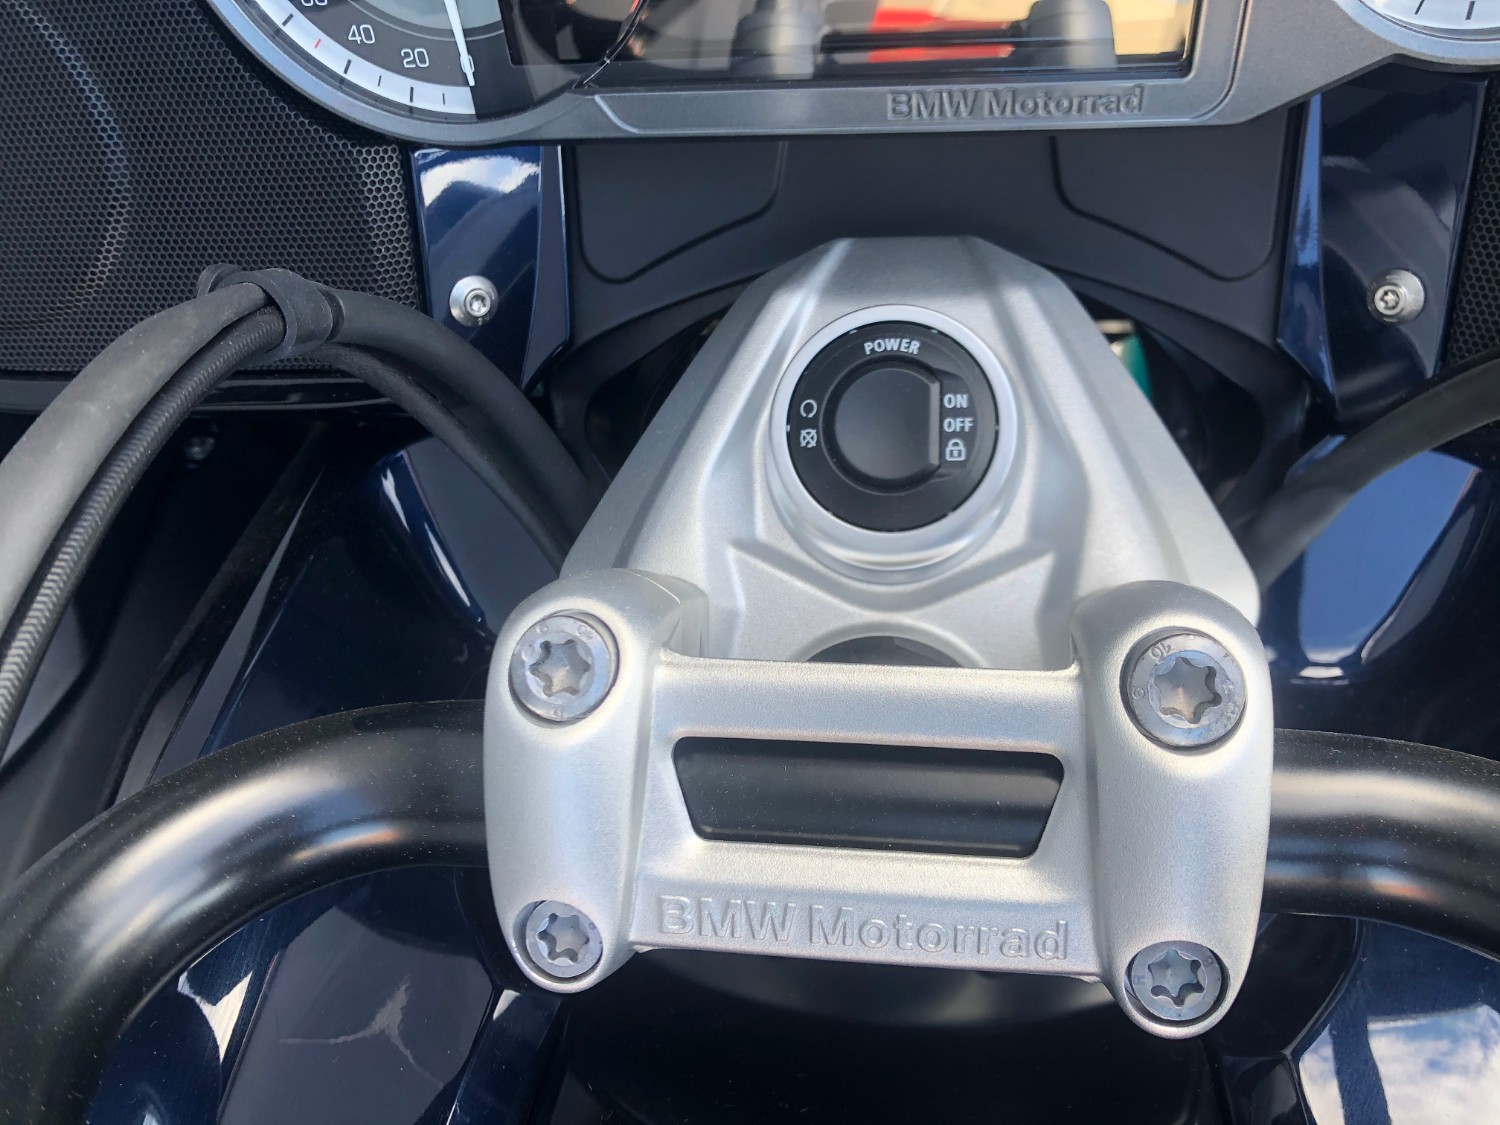 2019 BMW K1600 B Deluxe Motorcycle Image 33